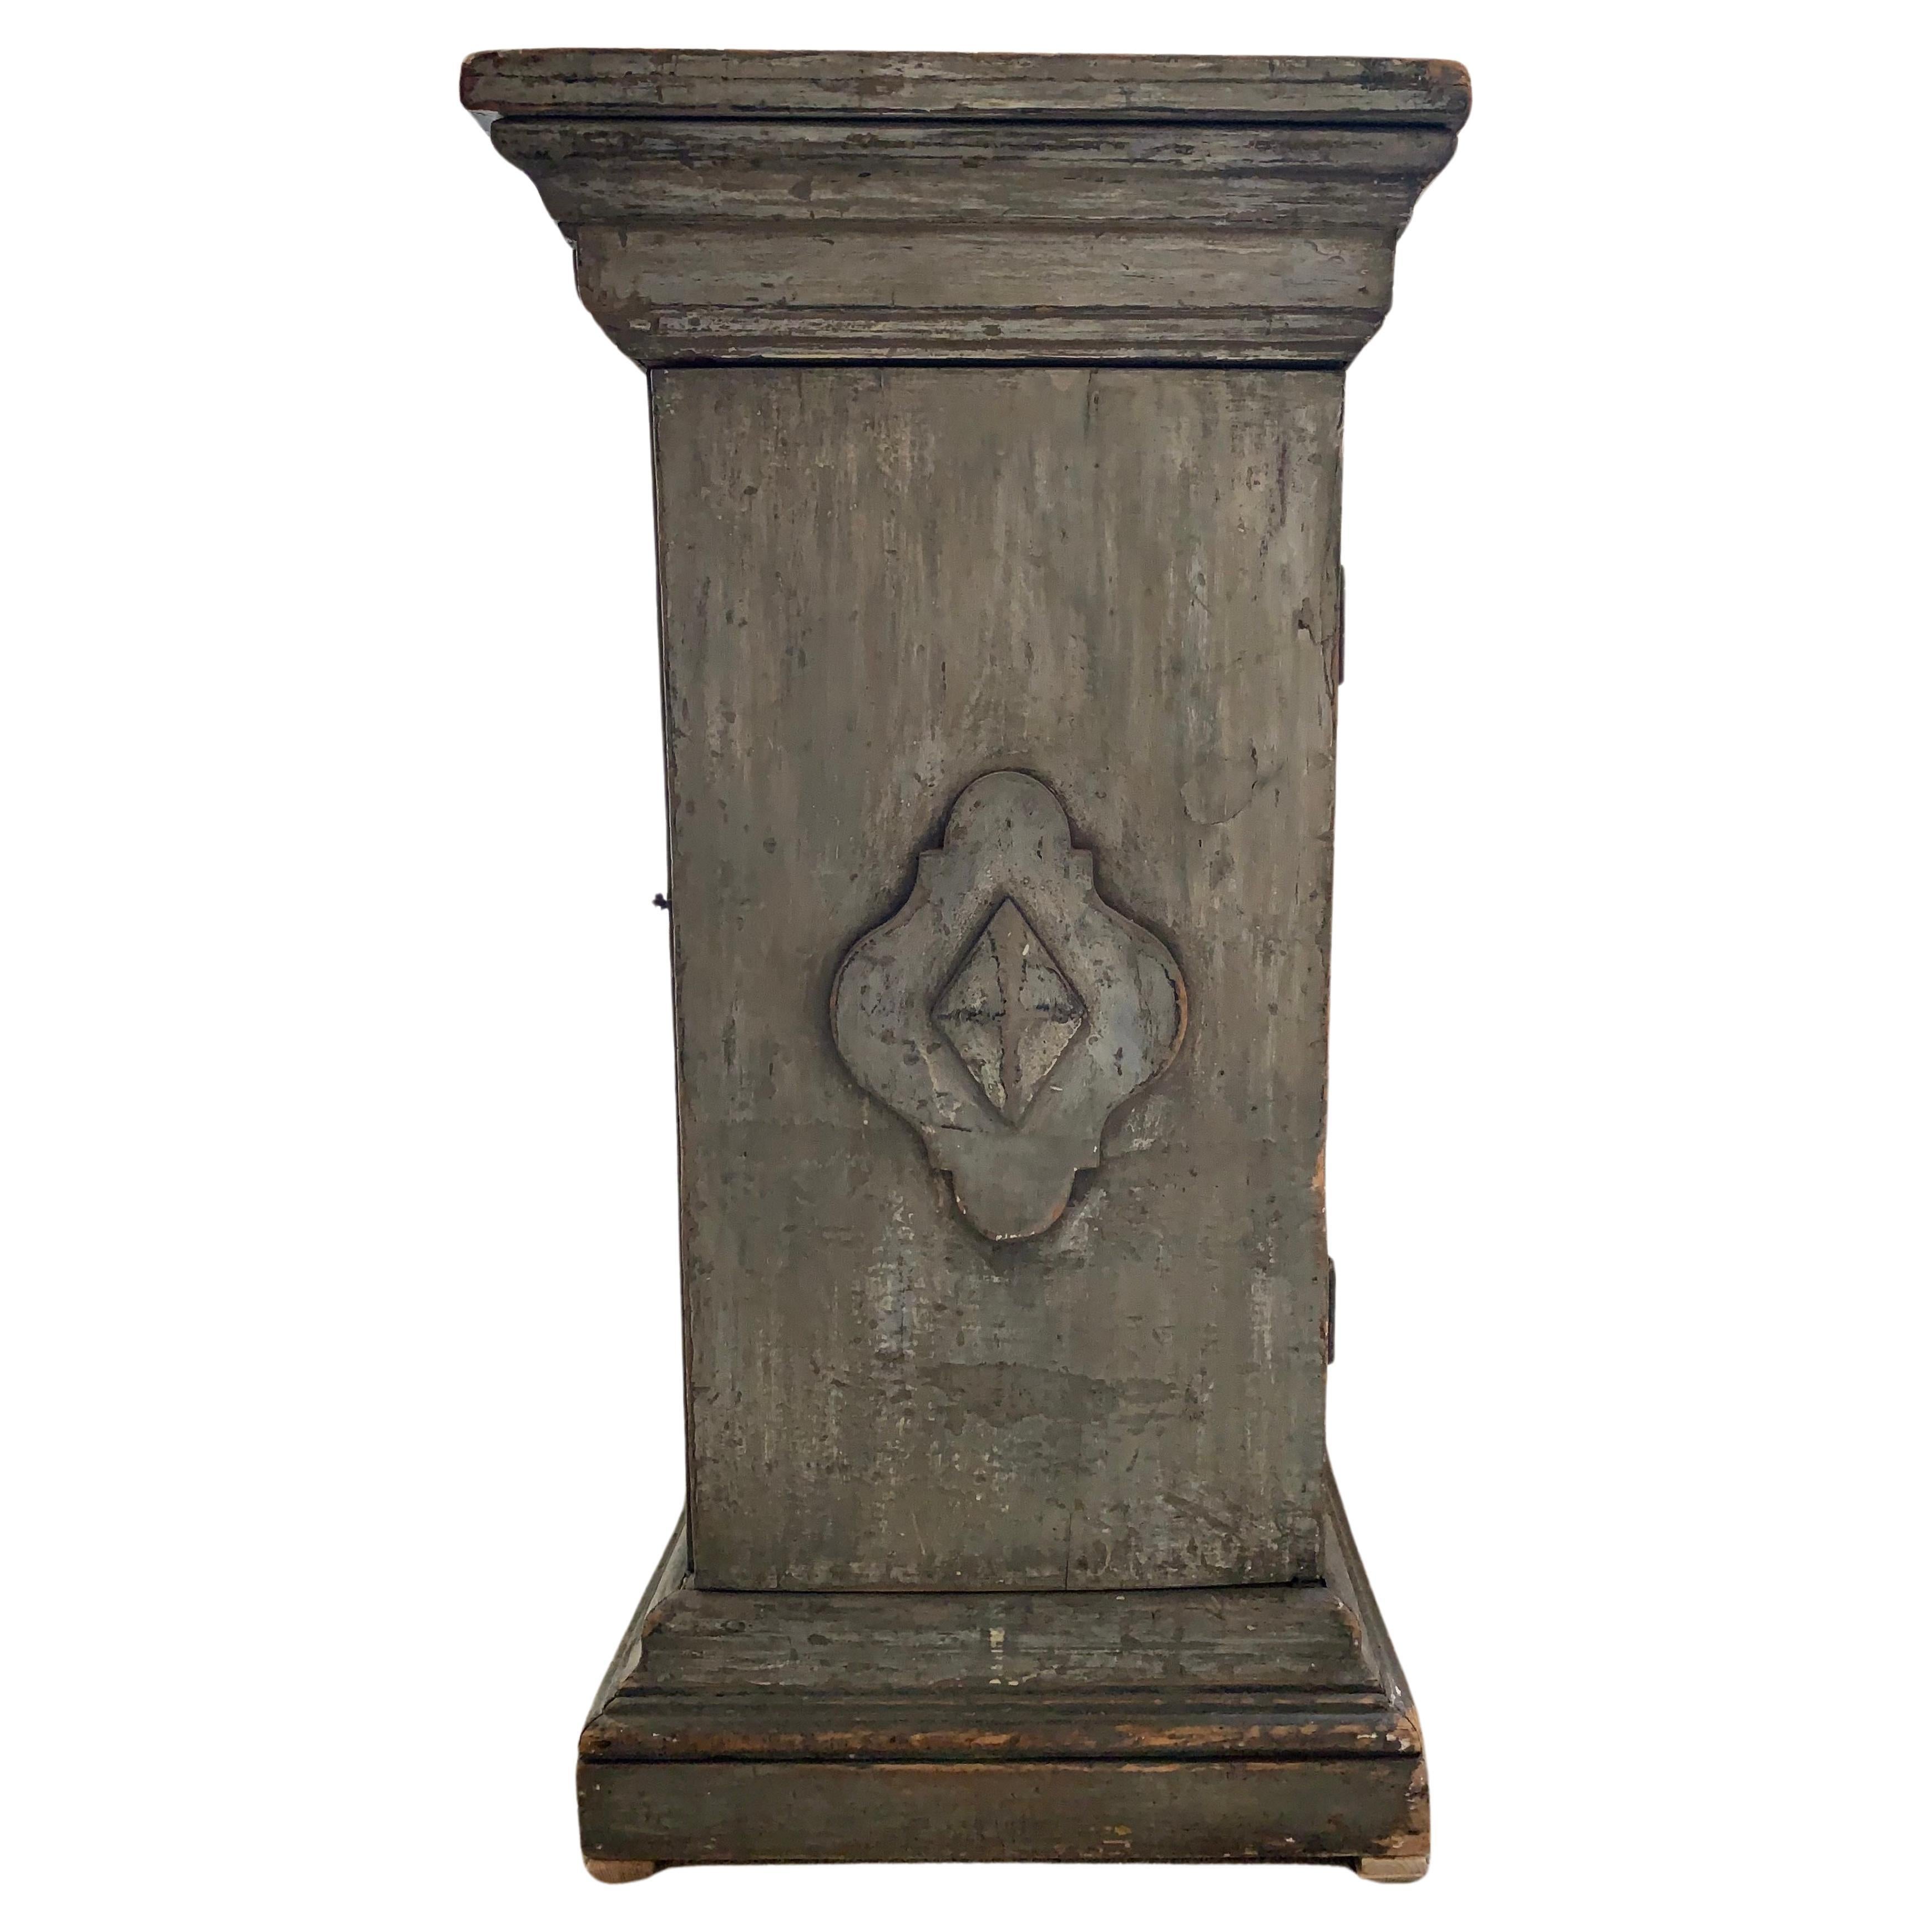 Circa 19th Century English Painted Wood Display Pedestal with Storage 